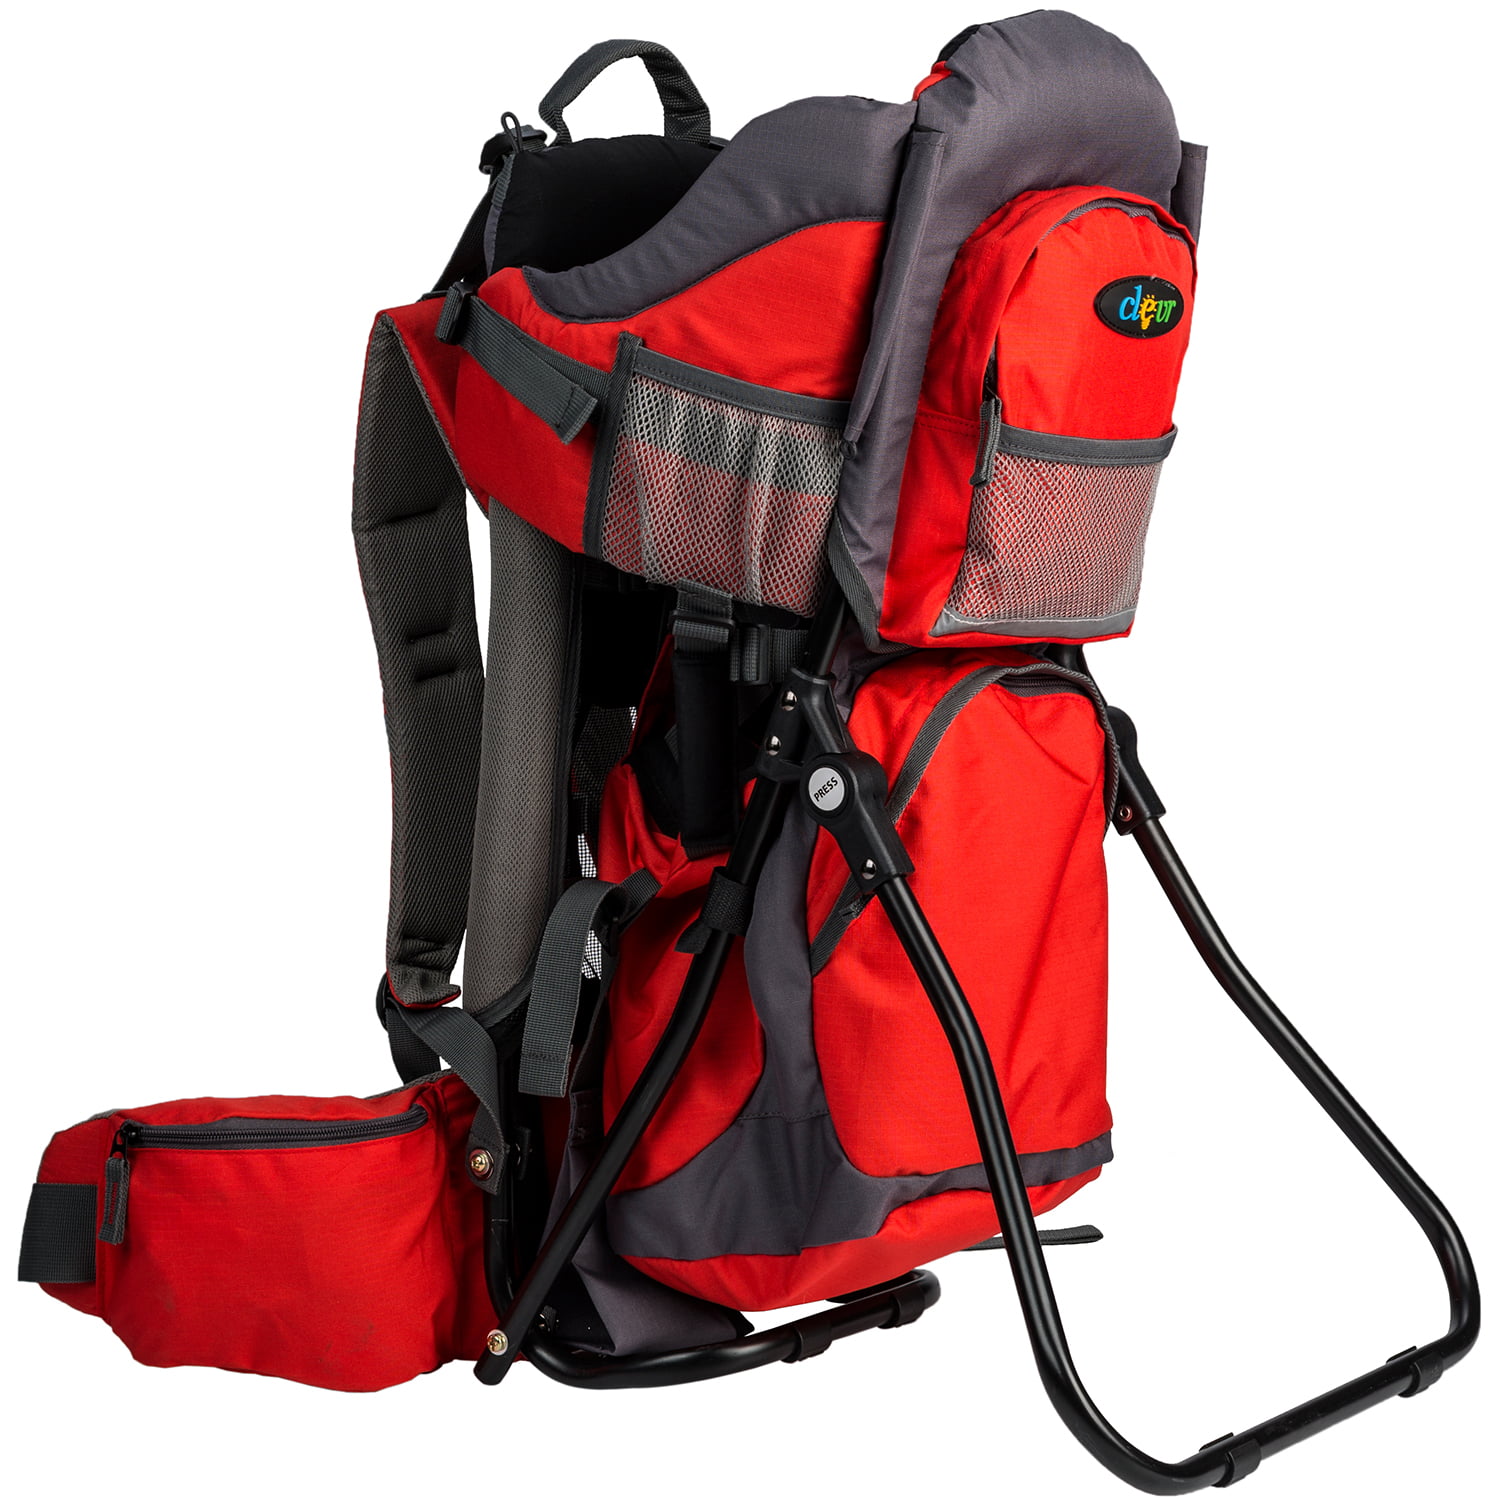 clevr child backpack carrier